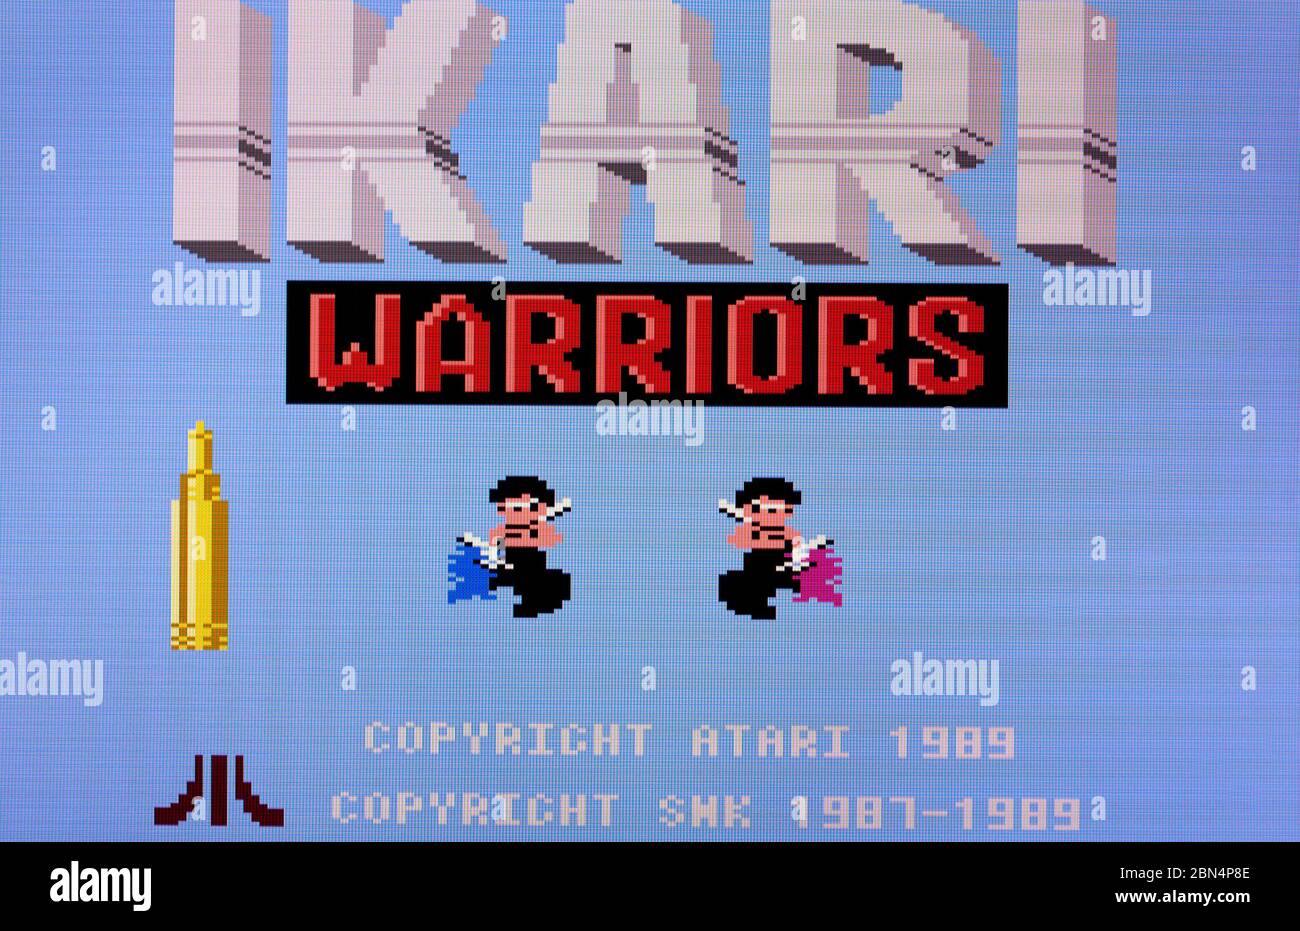 Ikari Warriors - Atari 7800 Videgame Stock Photo